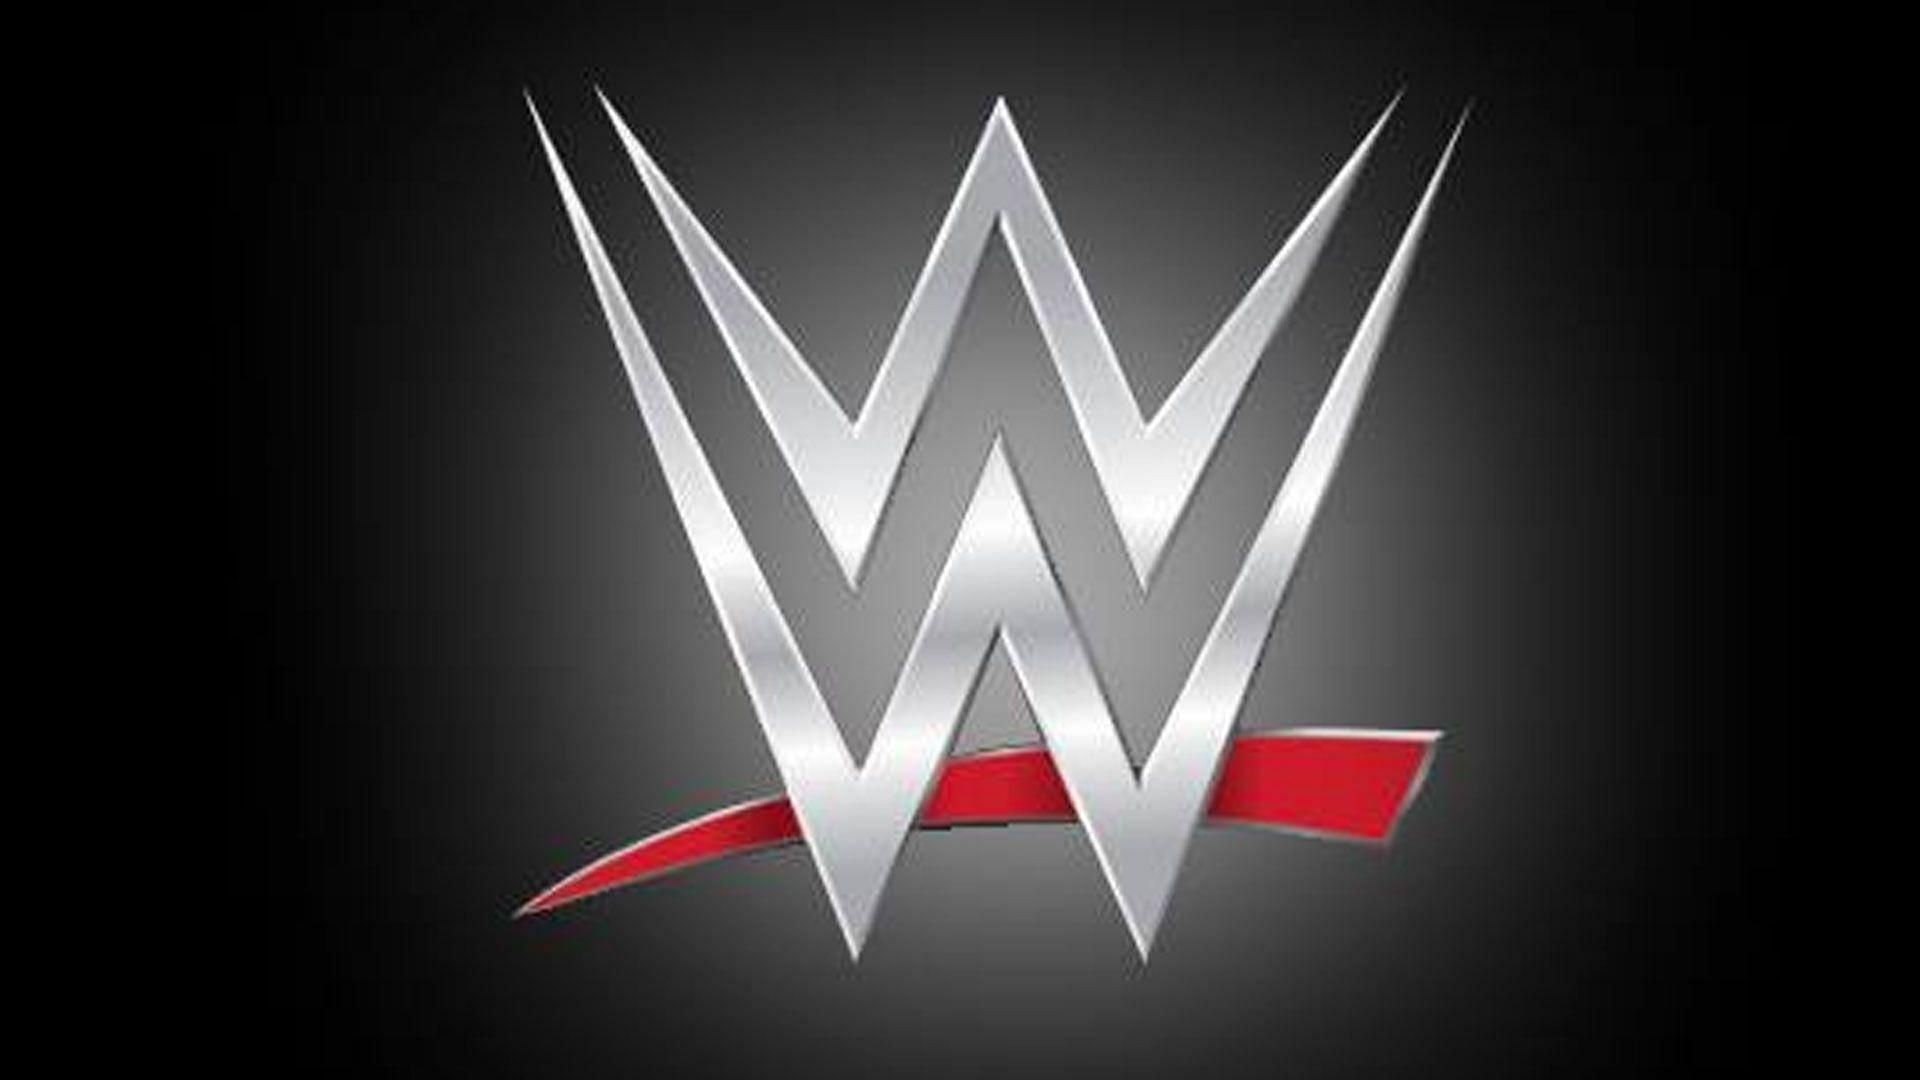 WWE has aforded some superstars a lavish lifestyle.